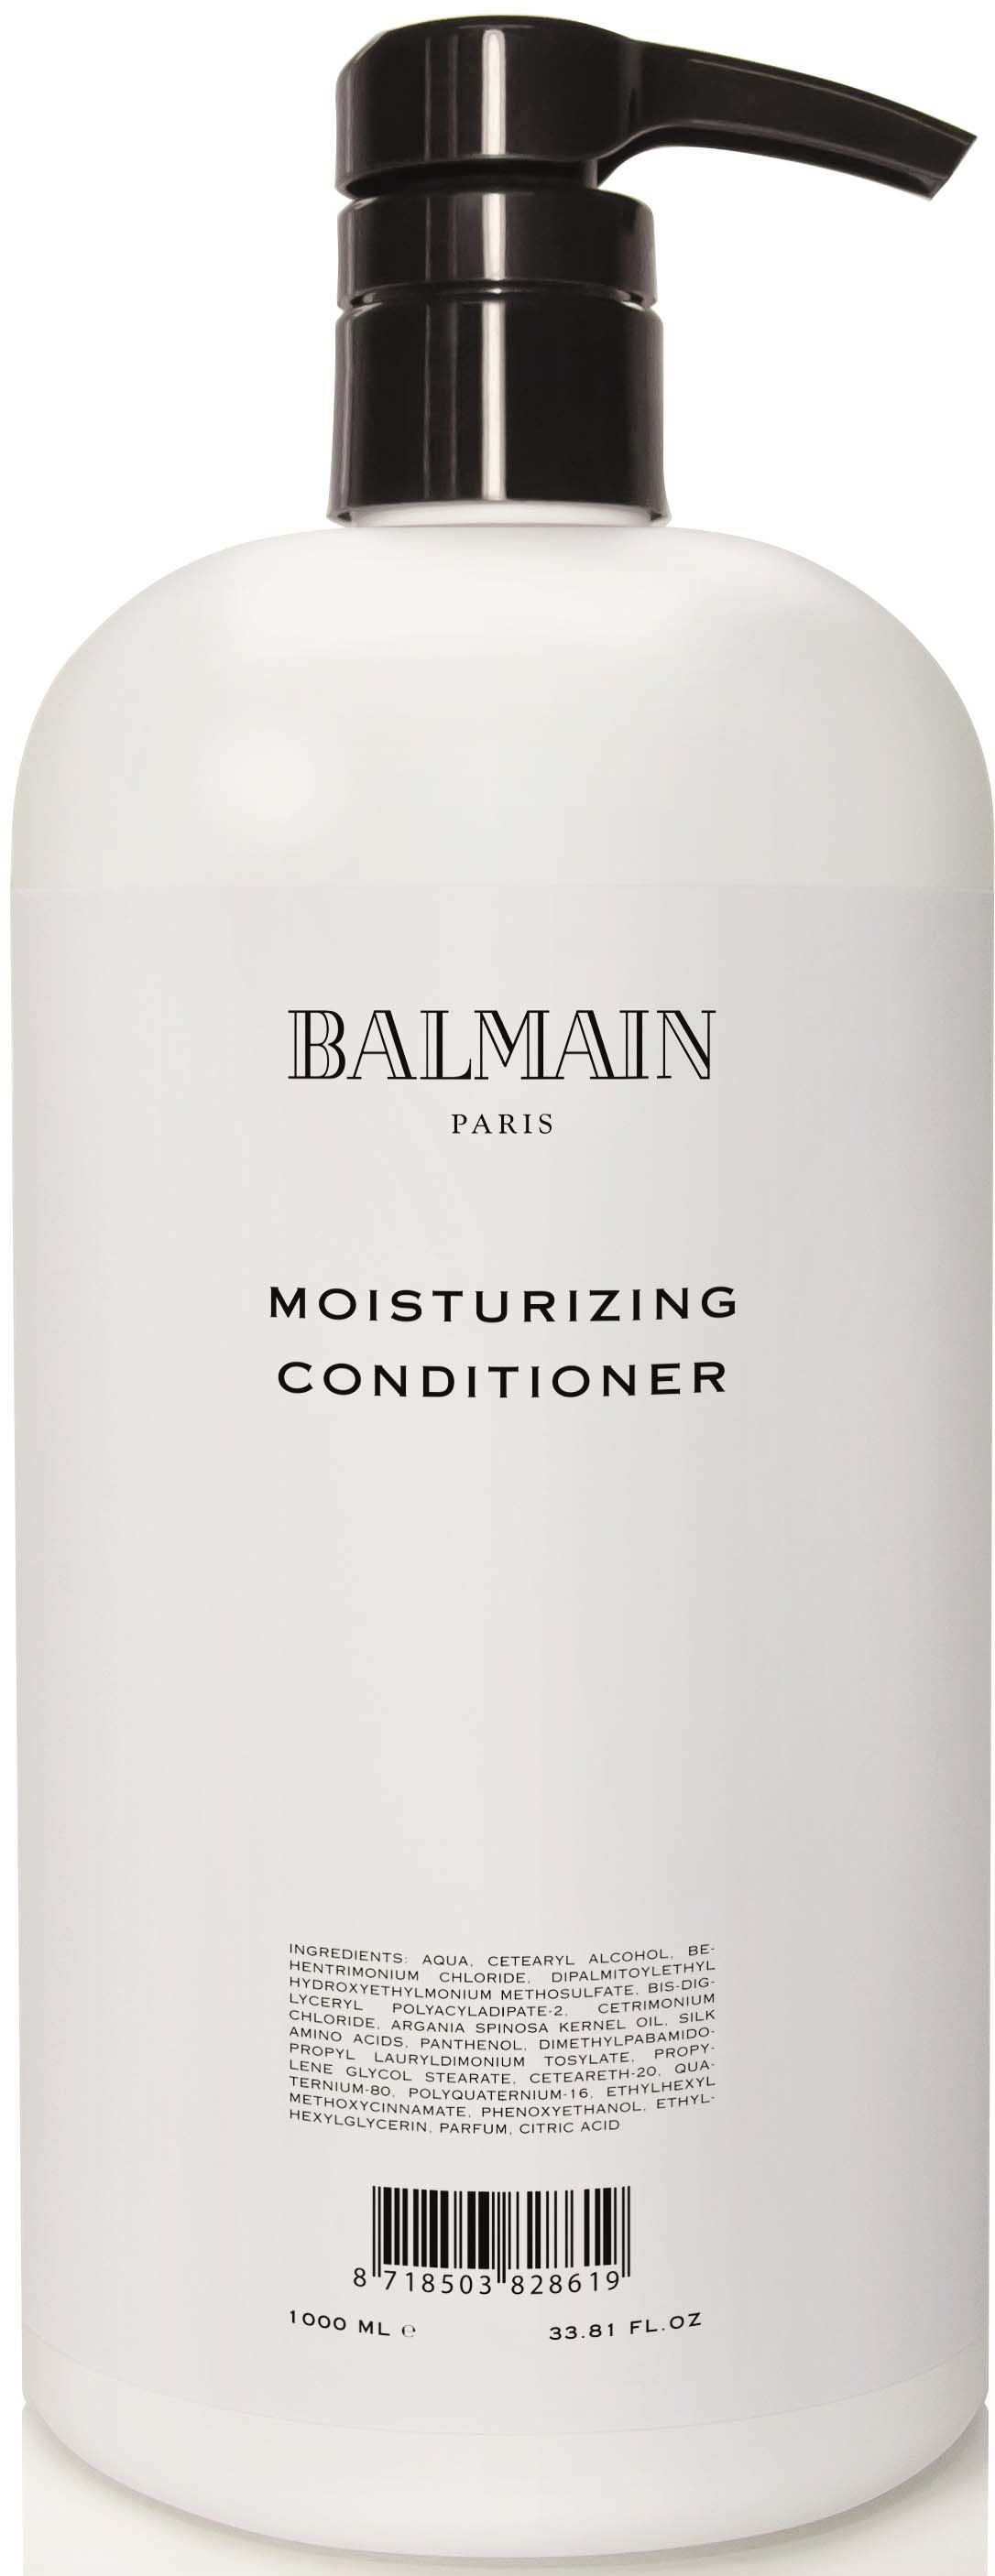 Balmain Paris Hair Couture Moisturizing Conditioner 1000 ml 